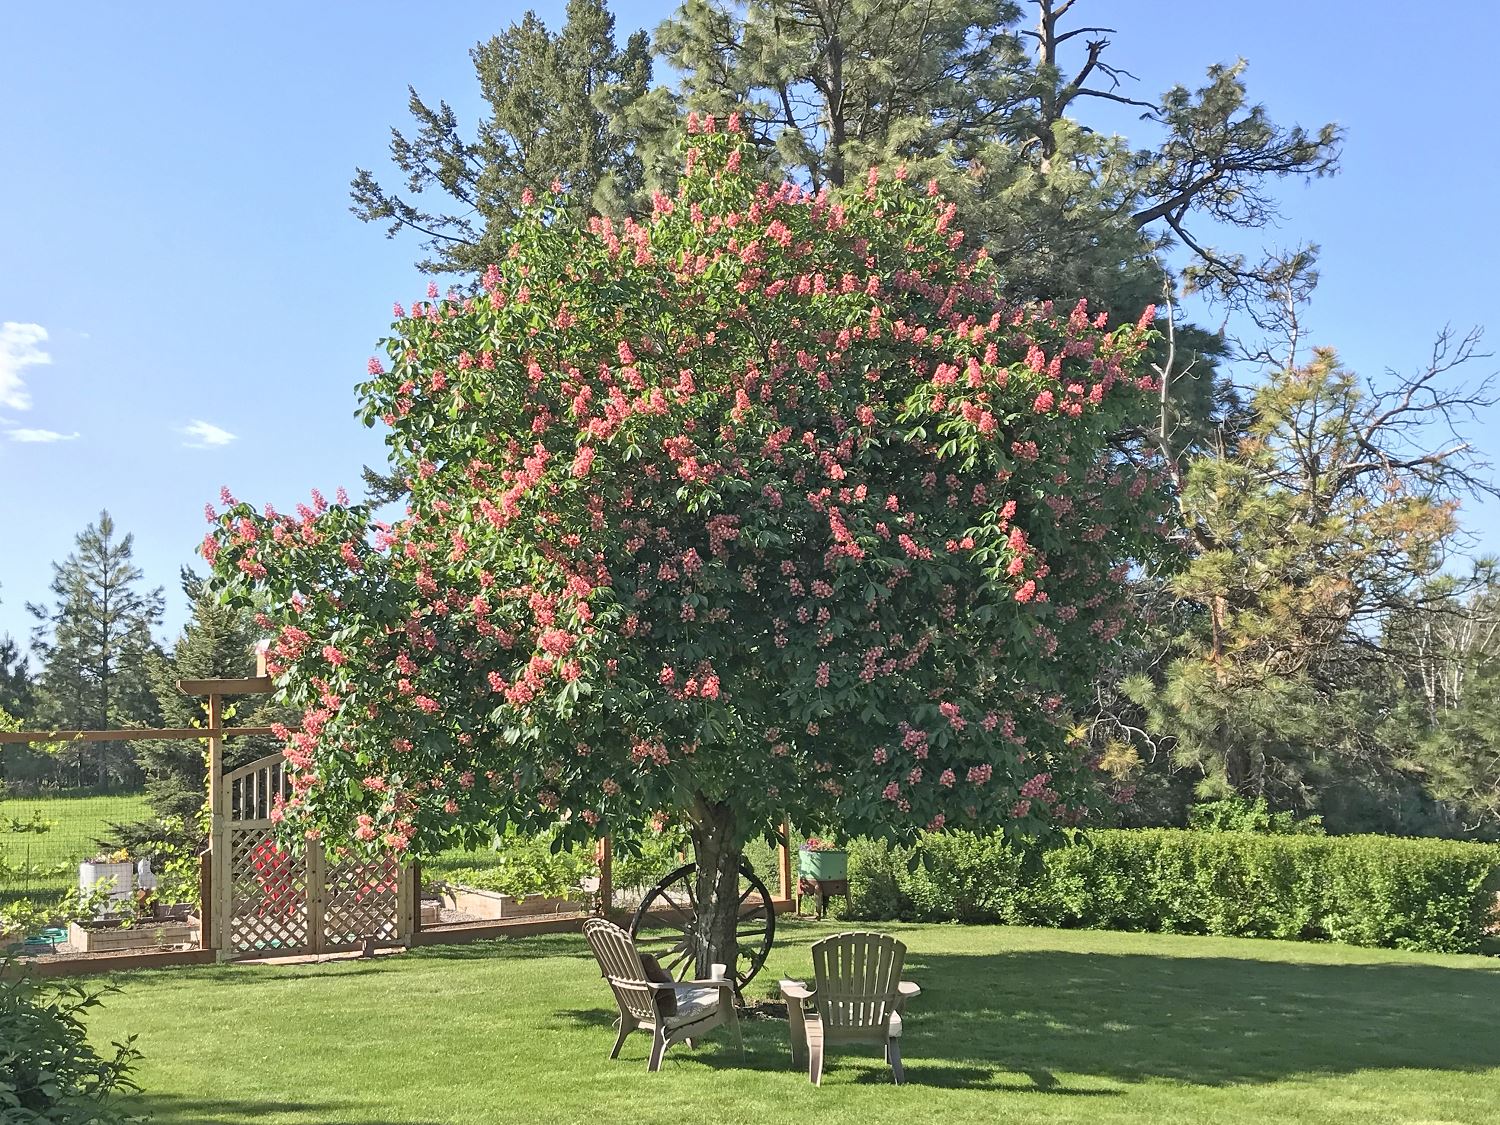 Backyard Shade Tree in Bloom